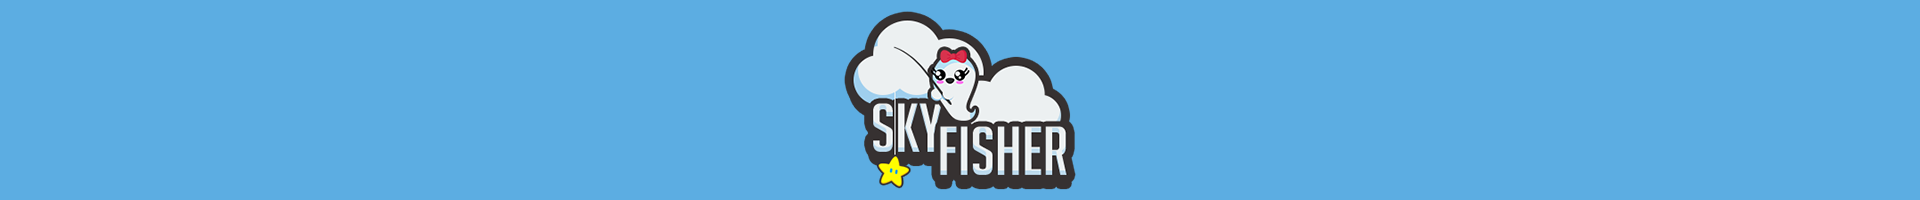 Sky Fisher - Game Jame Prototype